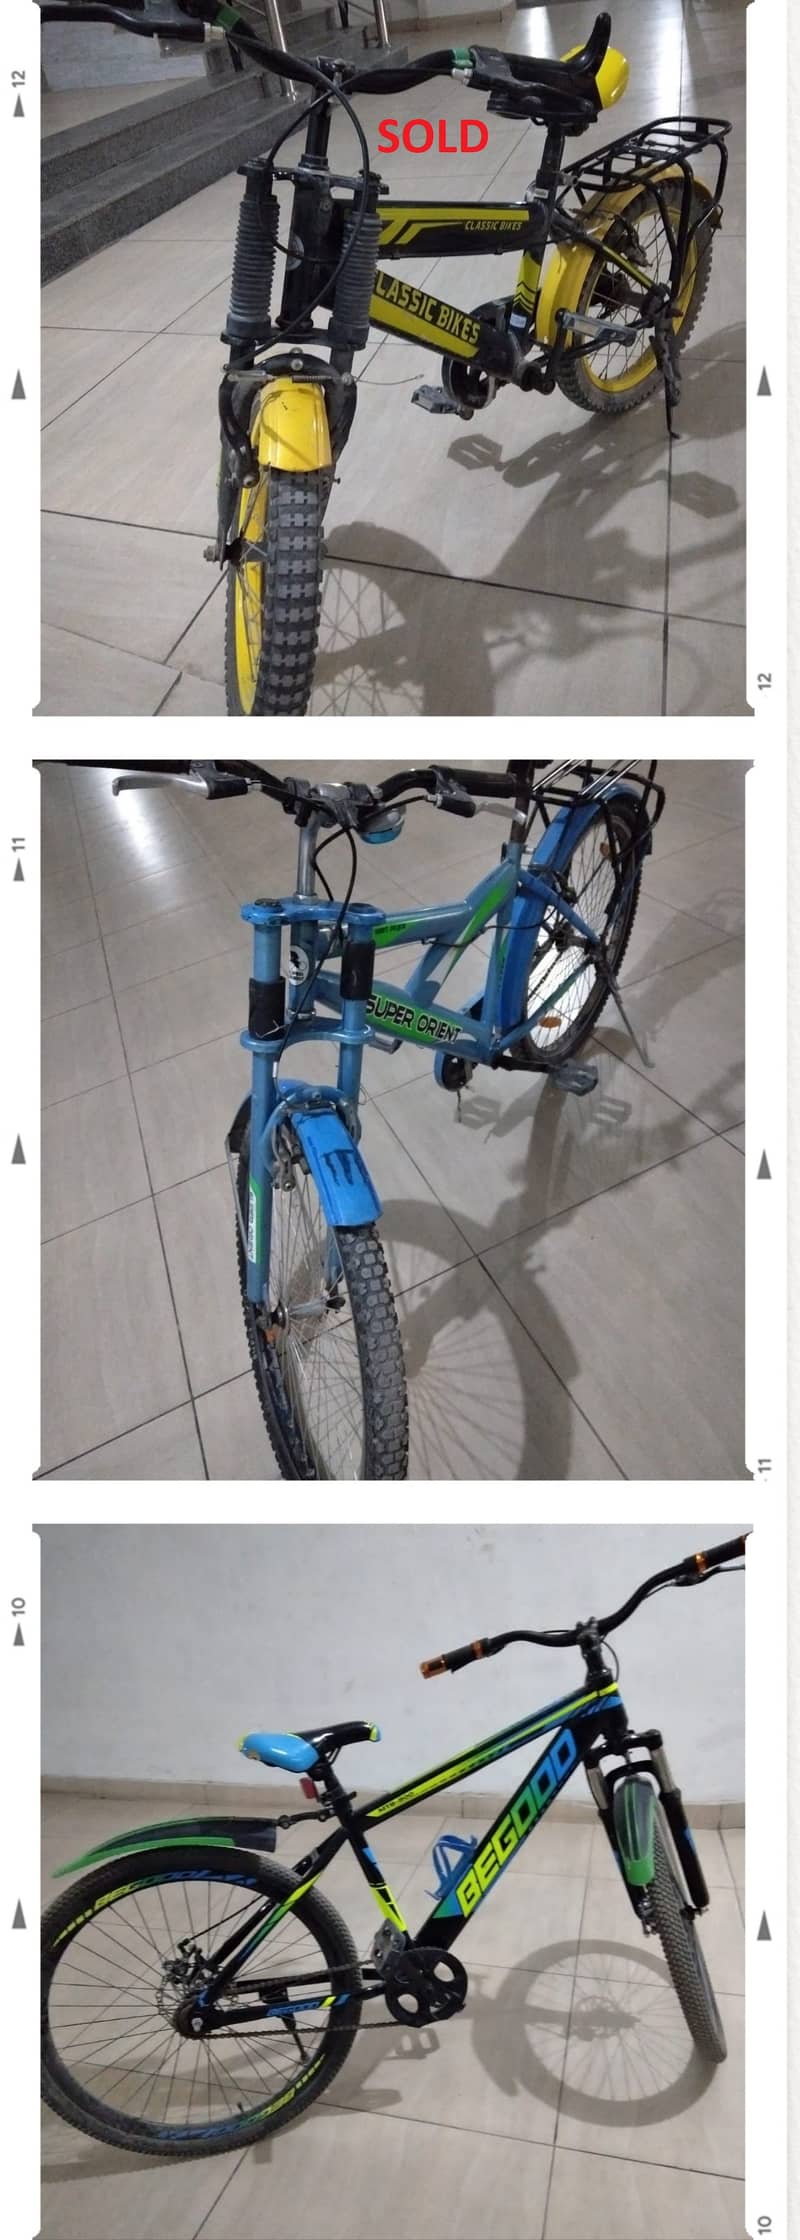 Bikes on Urgent Sale 0